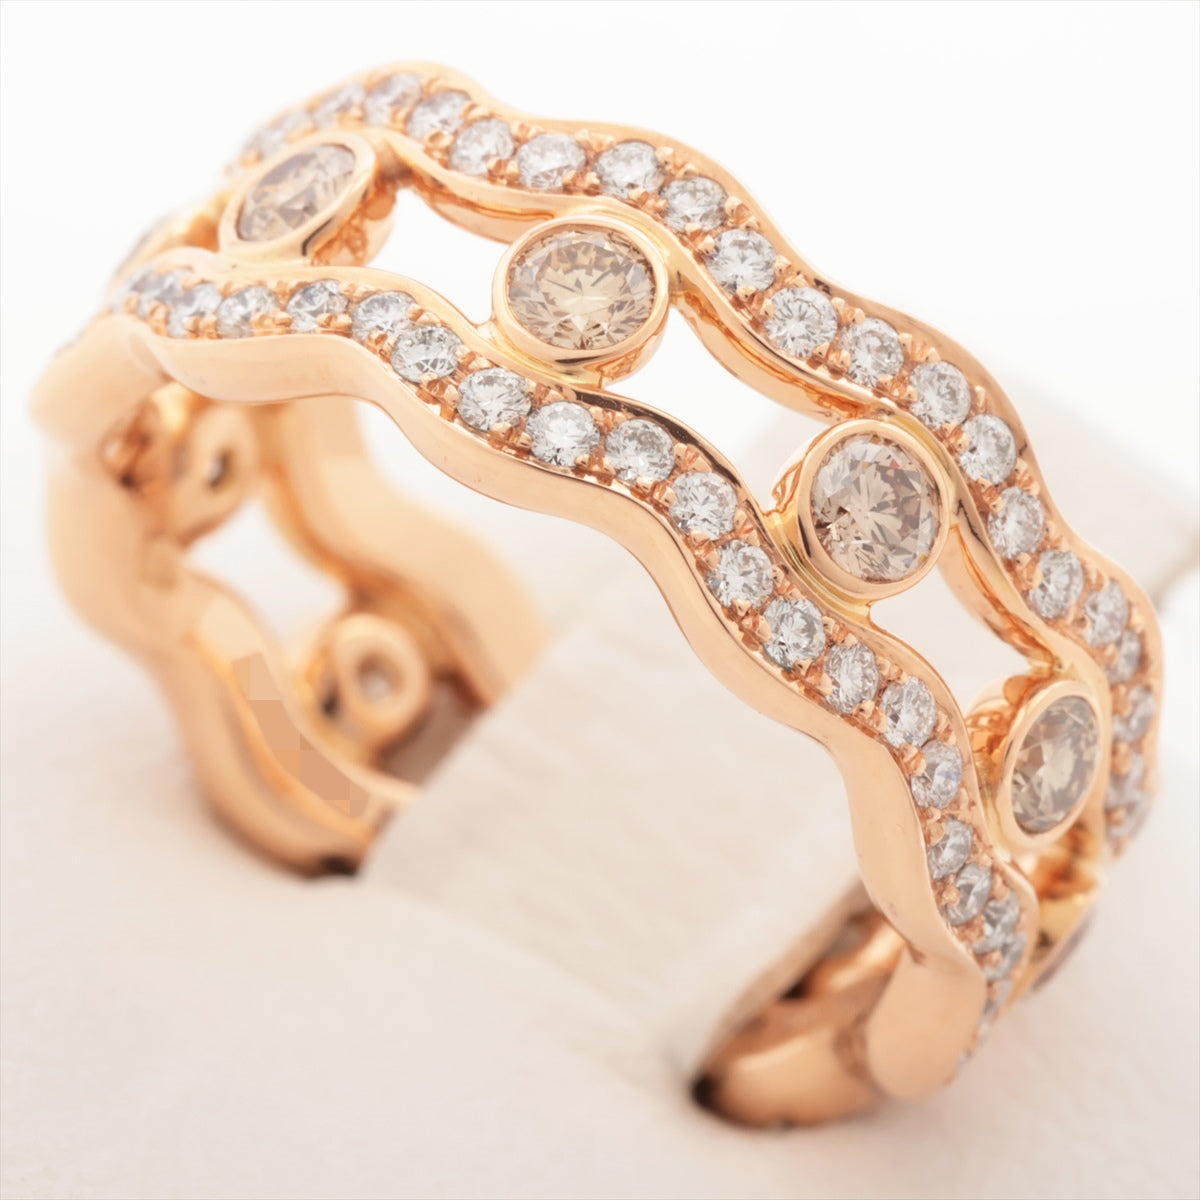 Hermès diamond rings 750(PG) 6.6g 51